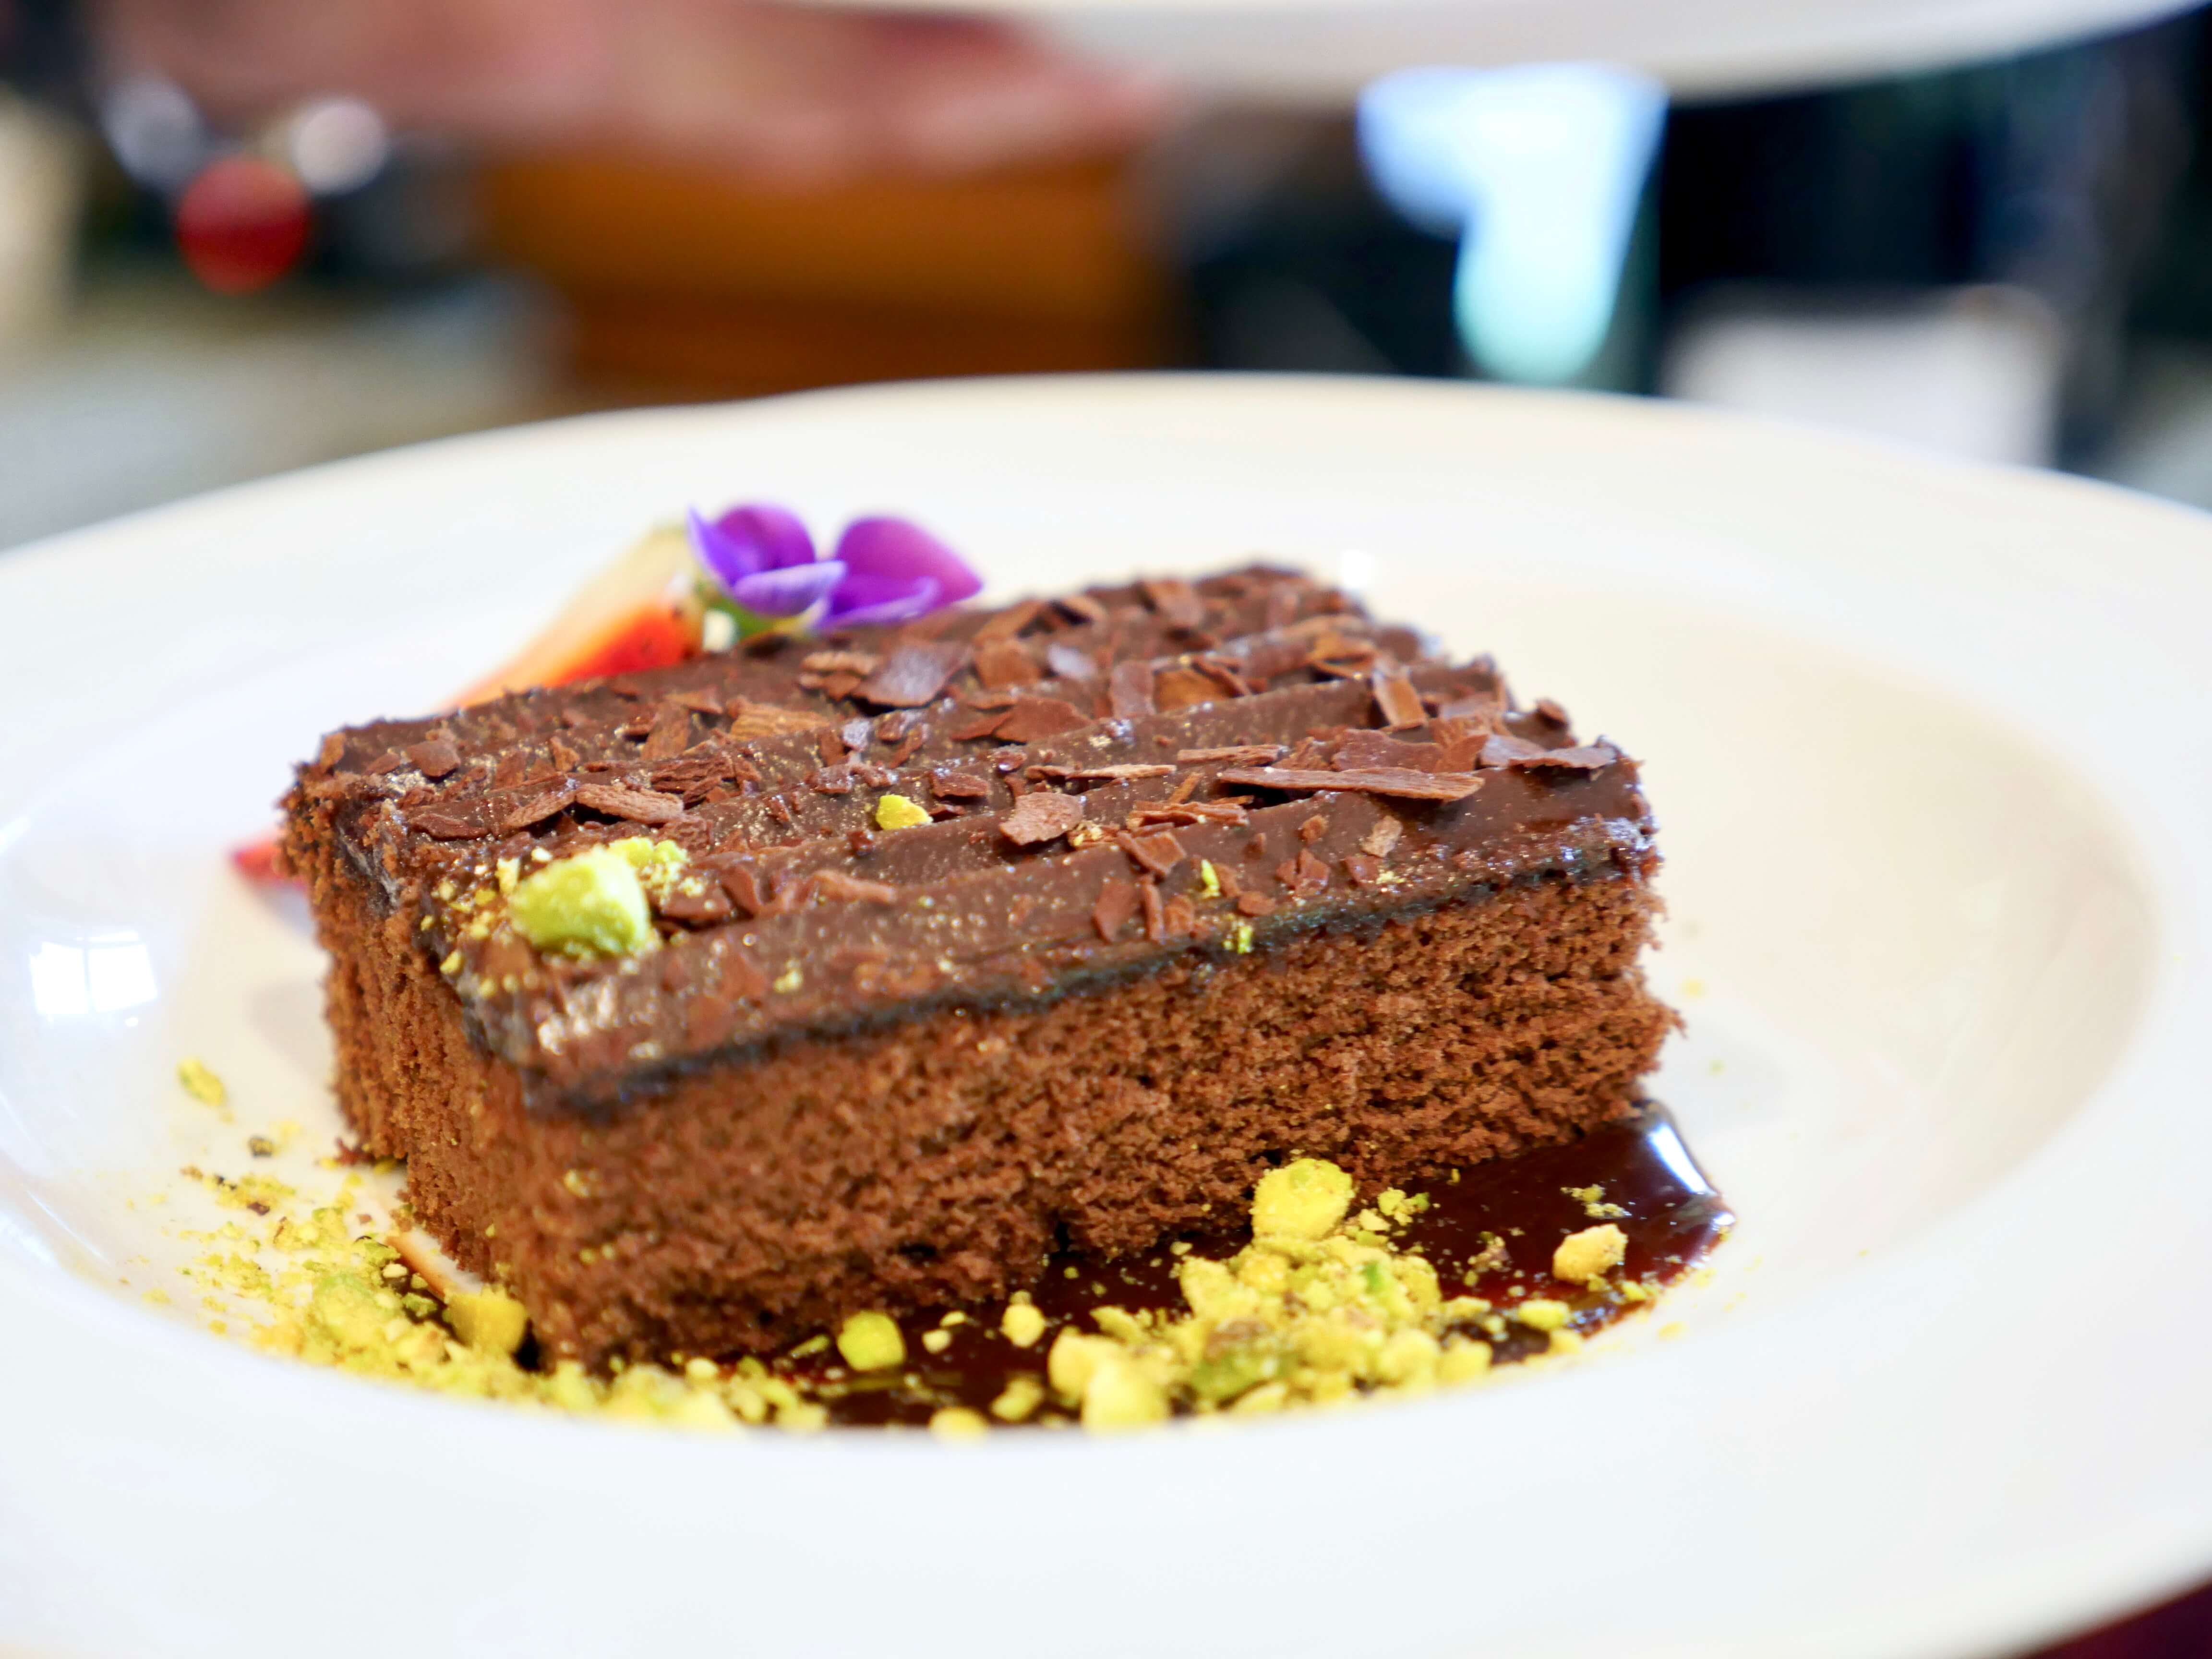 Restaurant style brownie dessert on a plate.